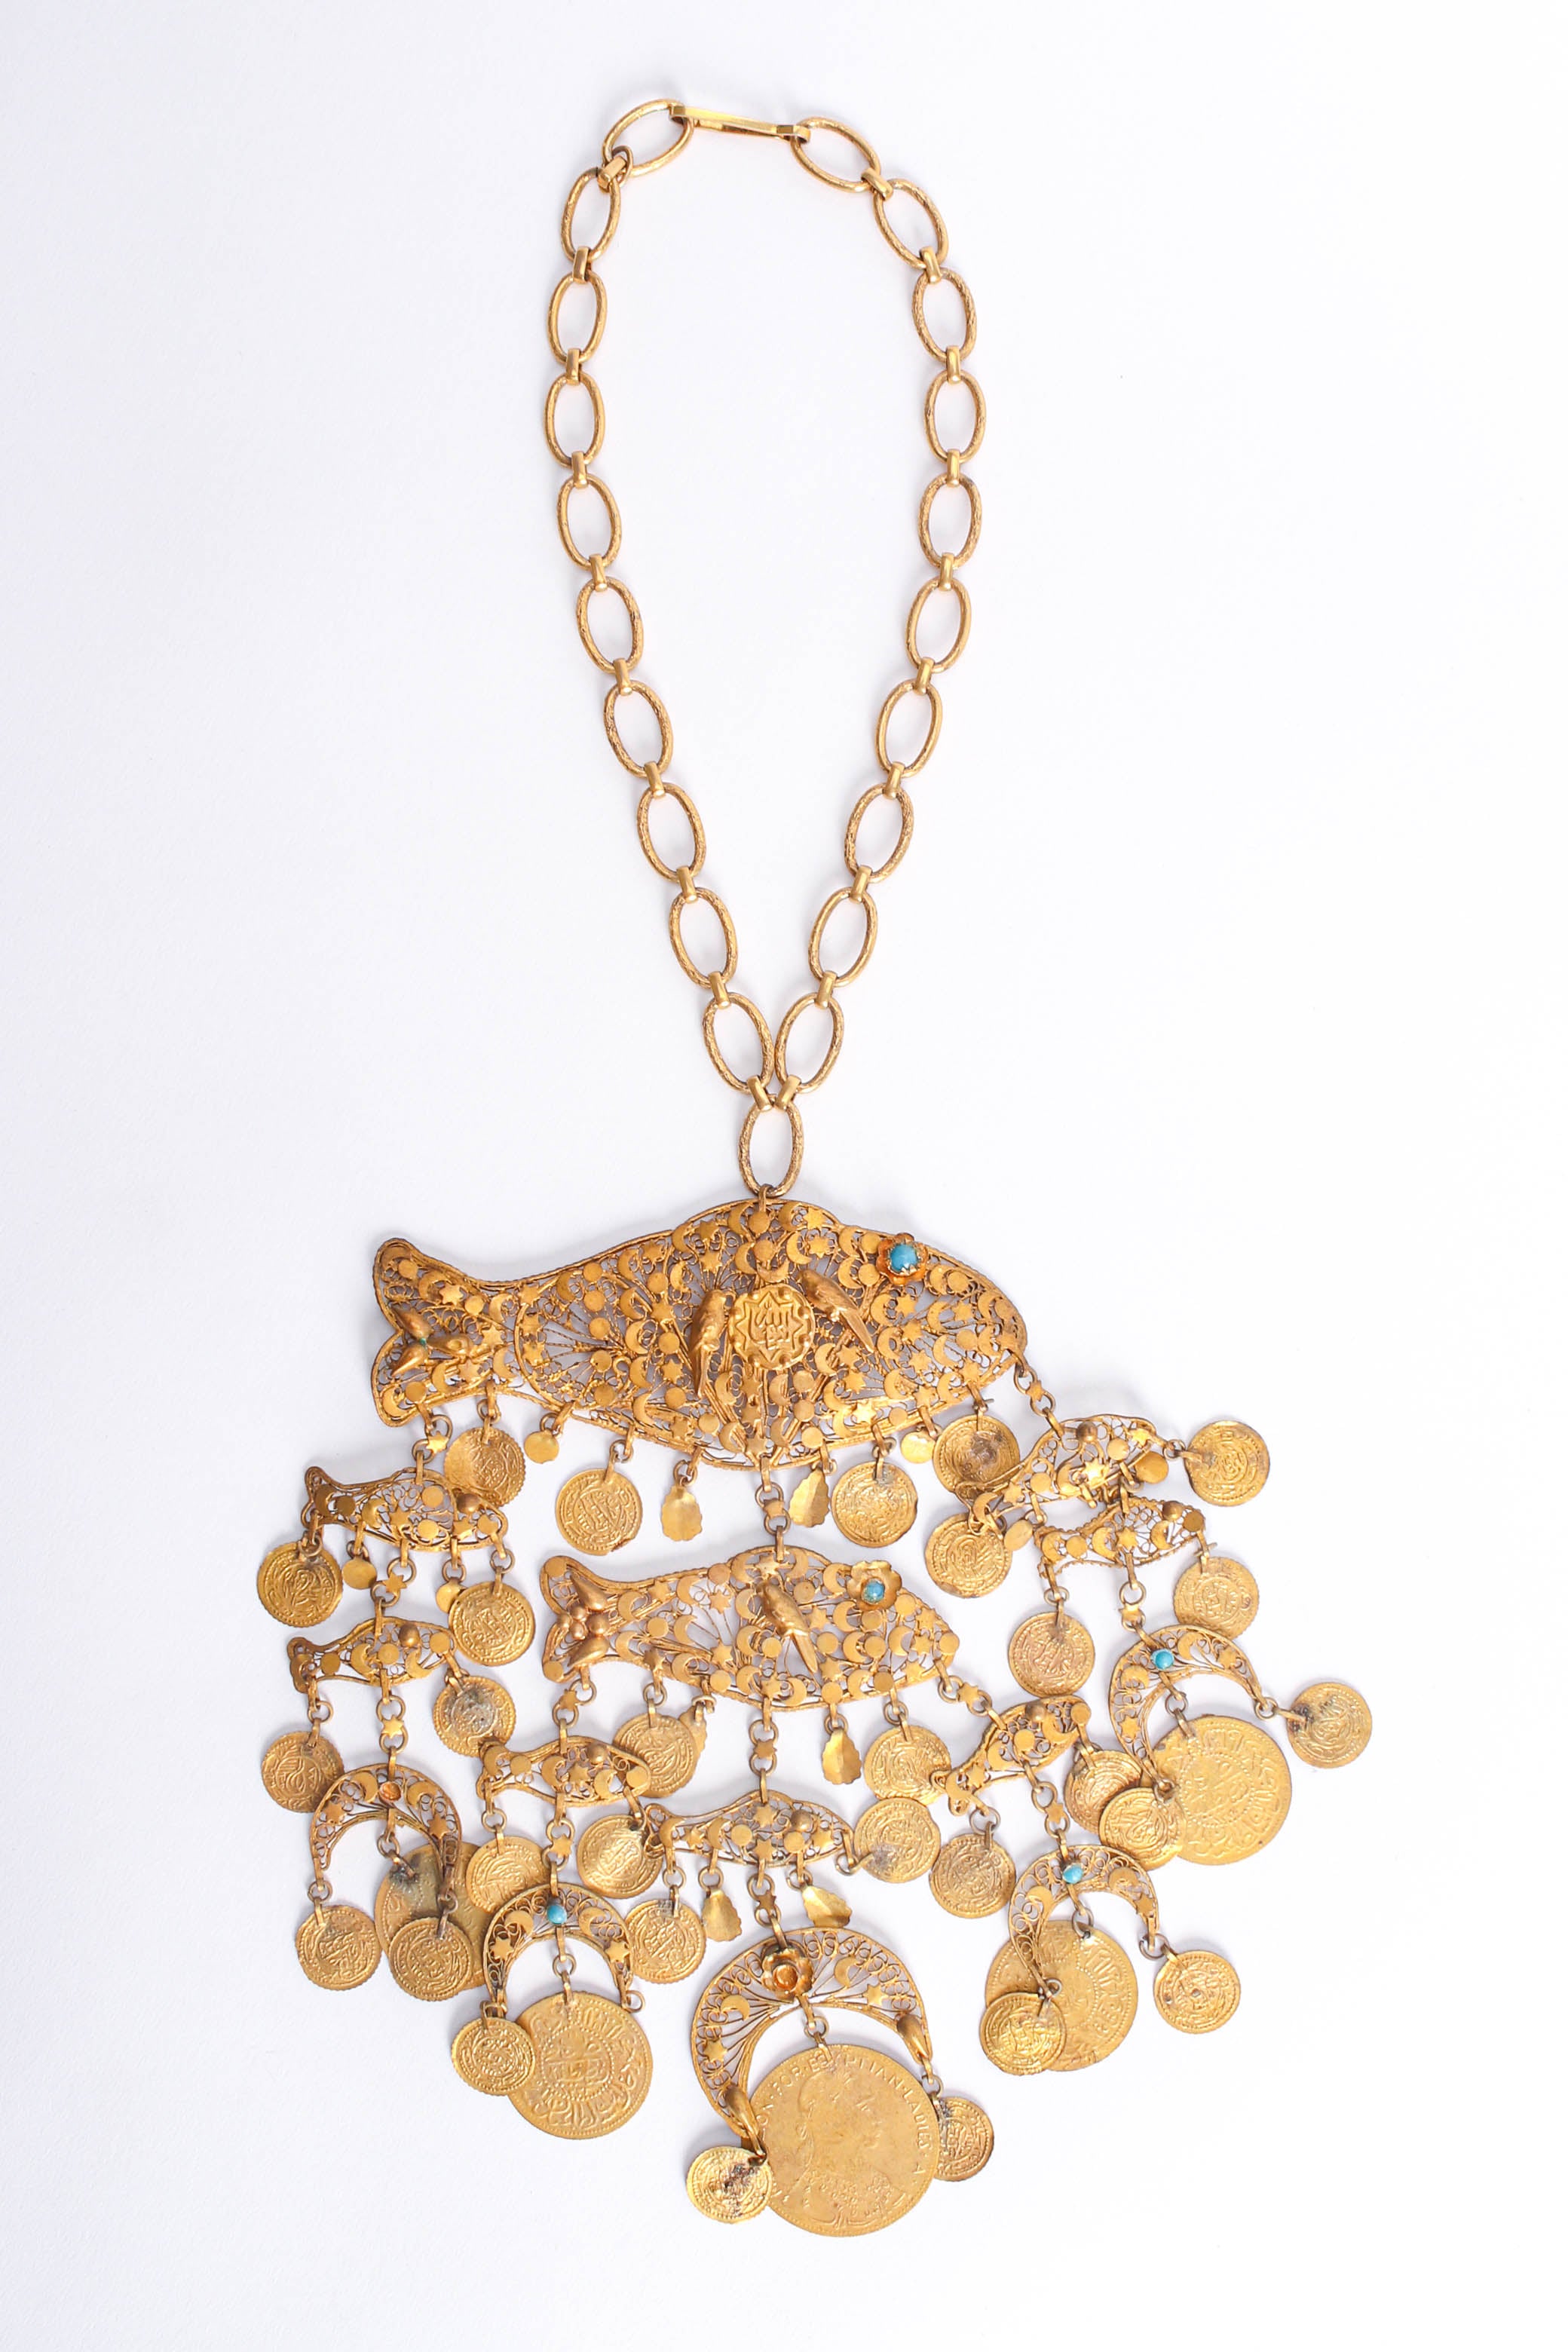 Vintage Filigree Moon Fish Necklace front lay flat @ Recess LA